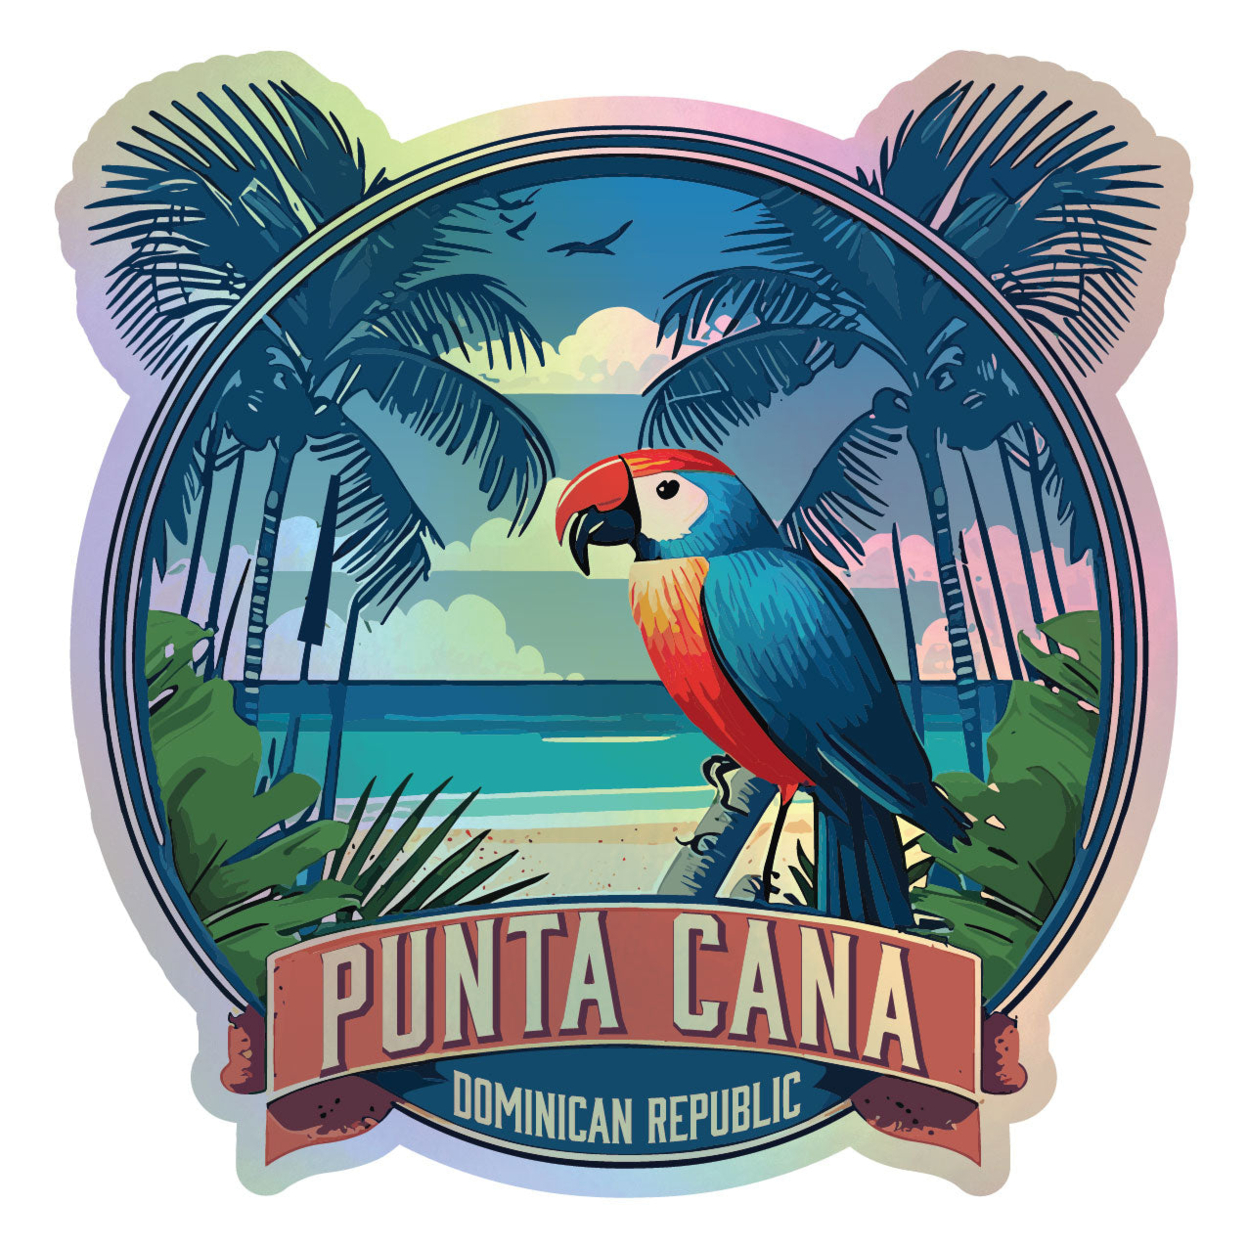 Punta Cana Dominican Republic Holographic Souvenir Vinyl Decal Sticker Parrot Design - 6 Inch